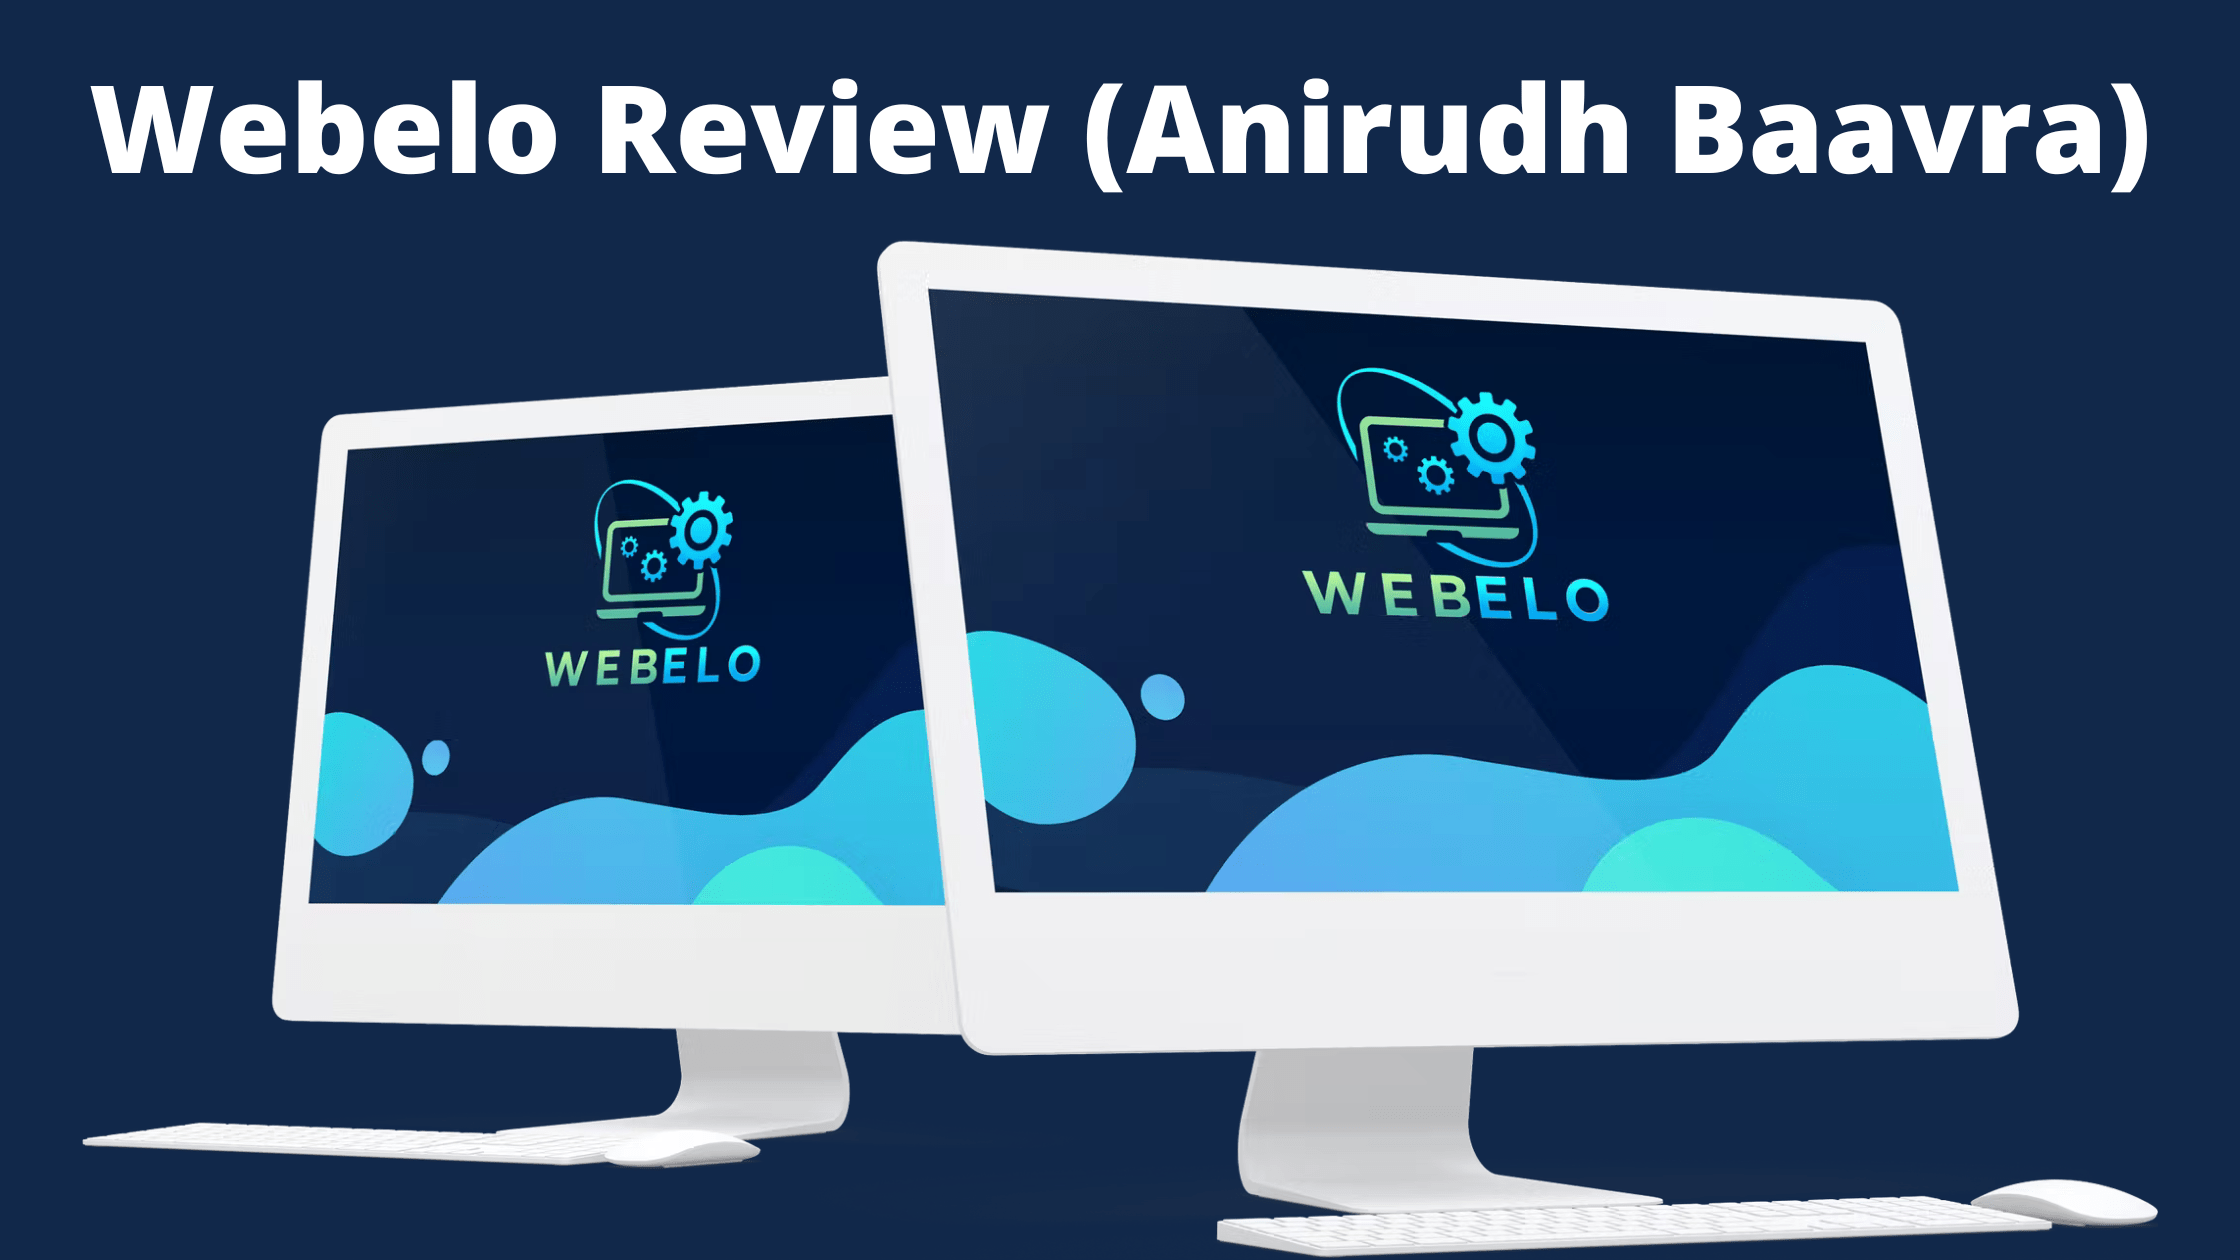 Webelo Review (Anirudh Baavra)